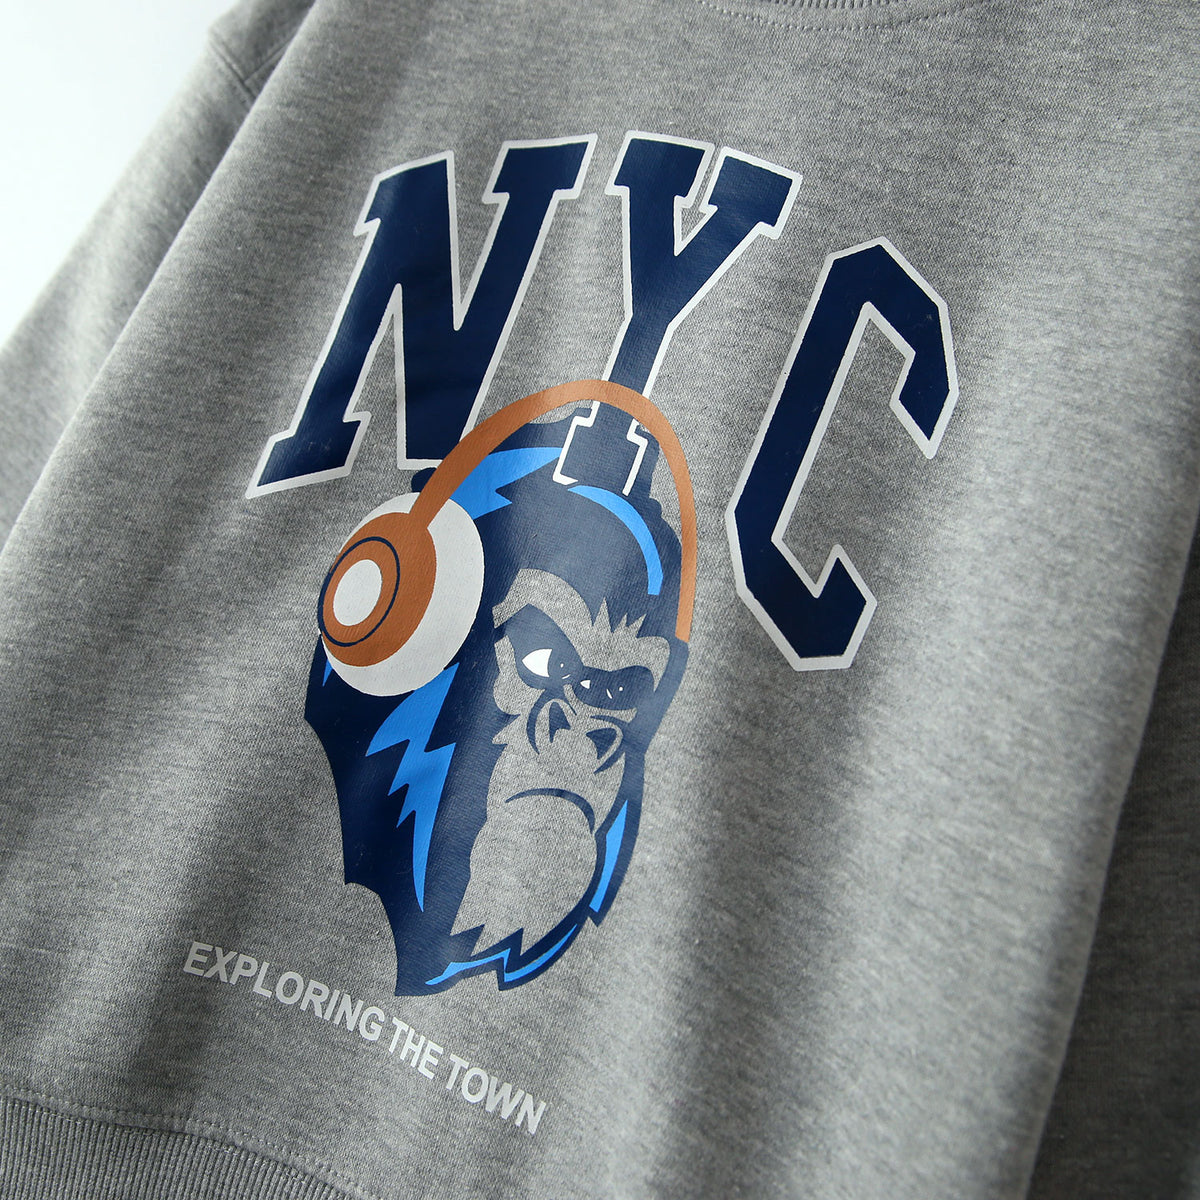 Premium Quality Graphic Fleece Sweatshirt For Boys